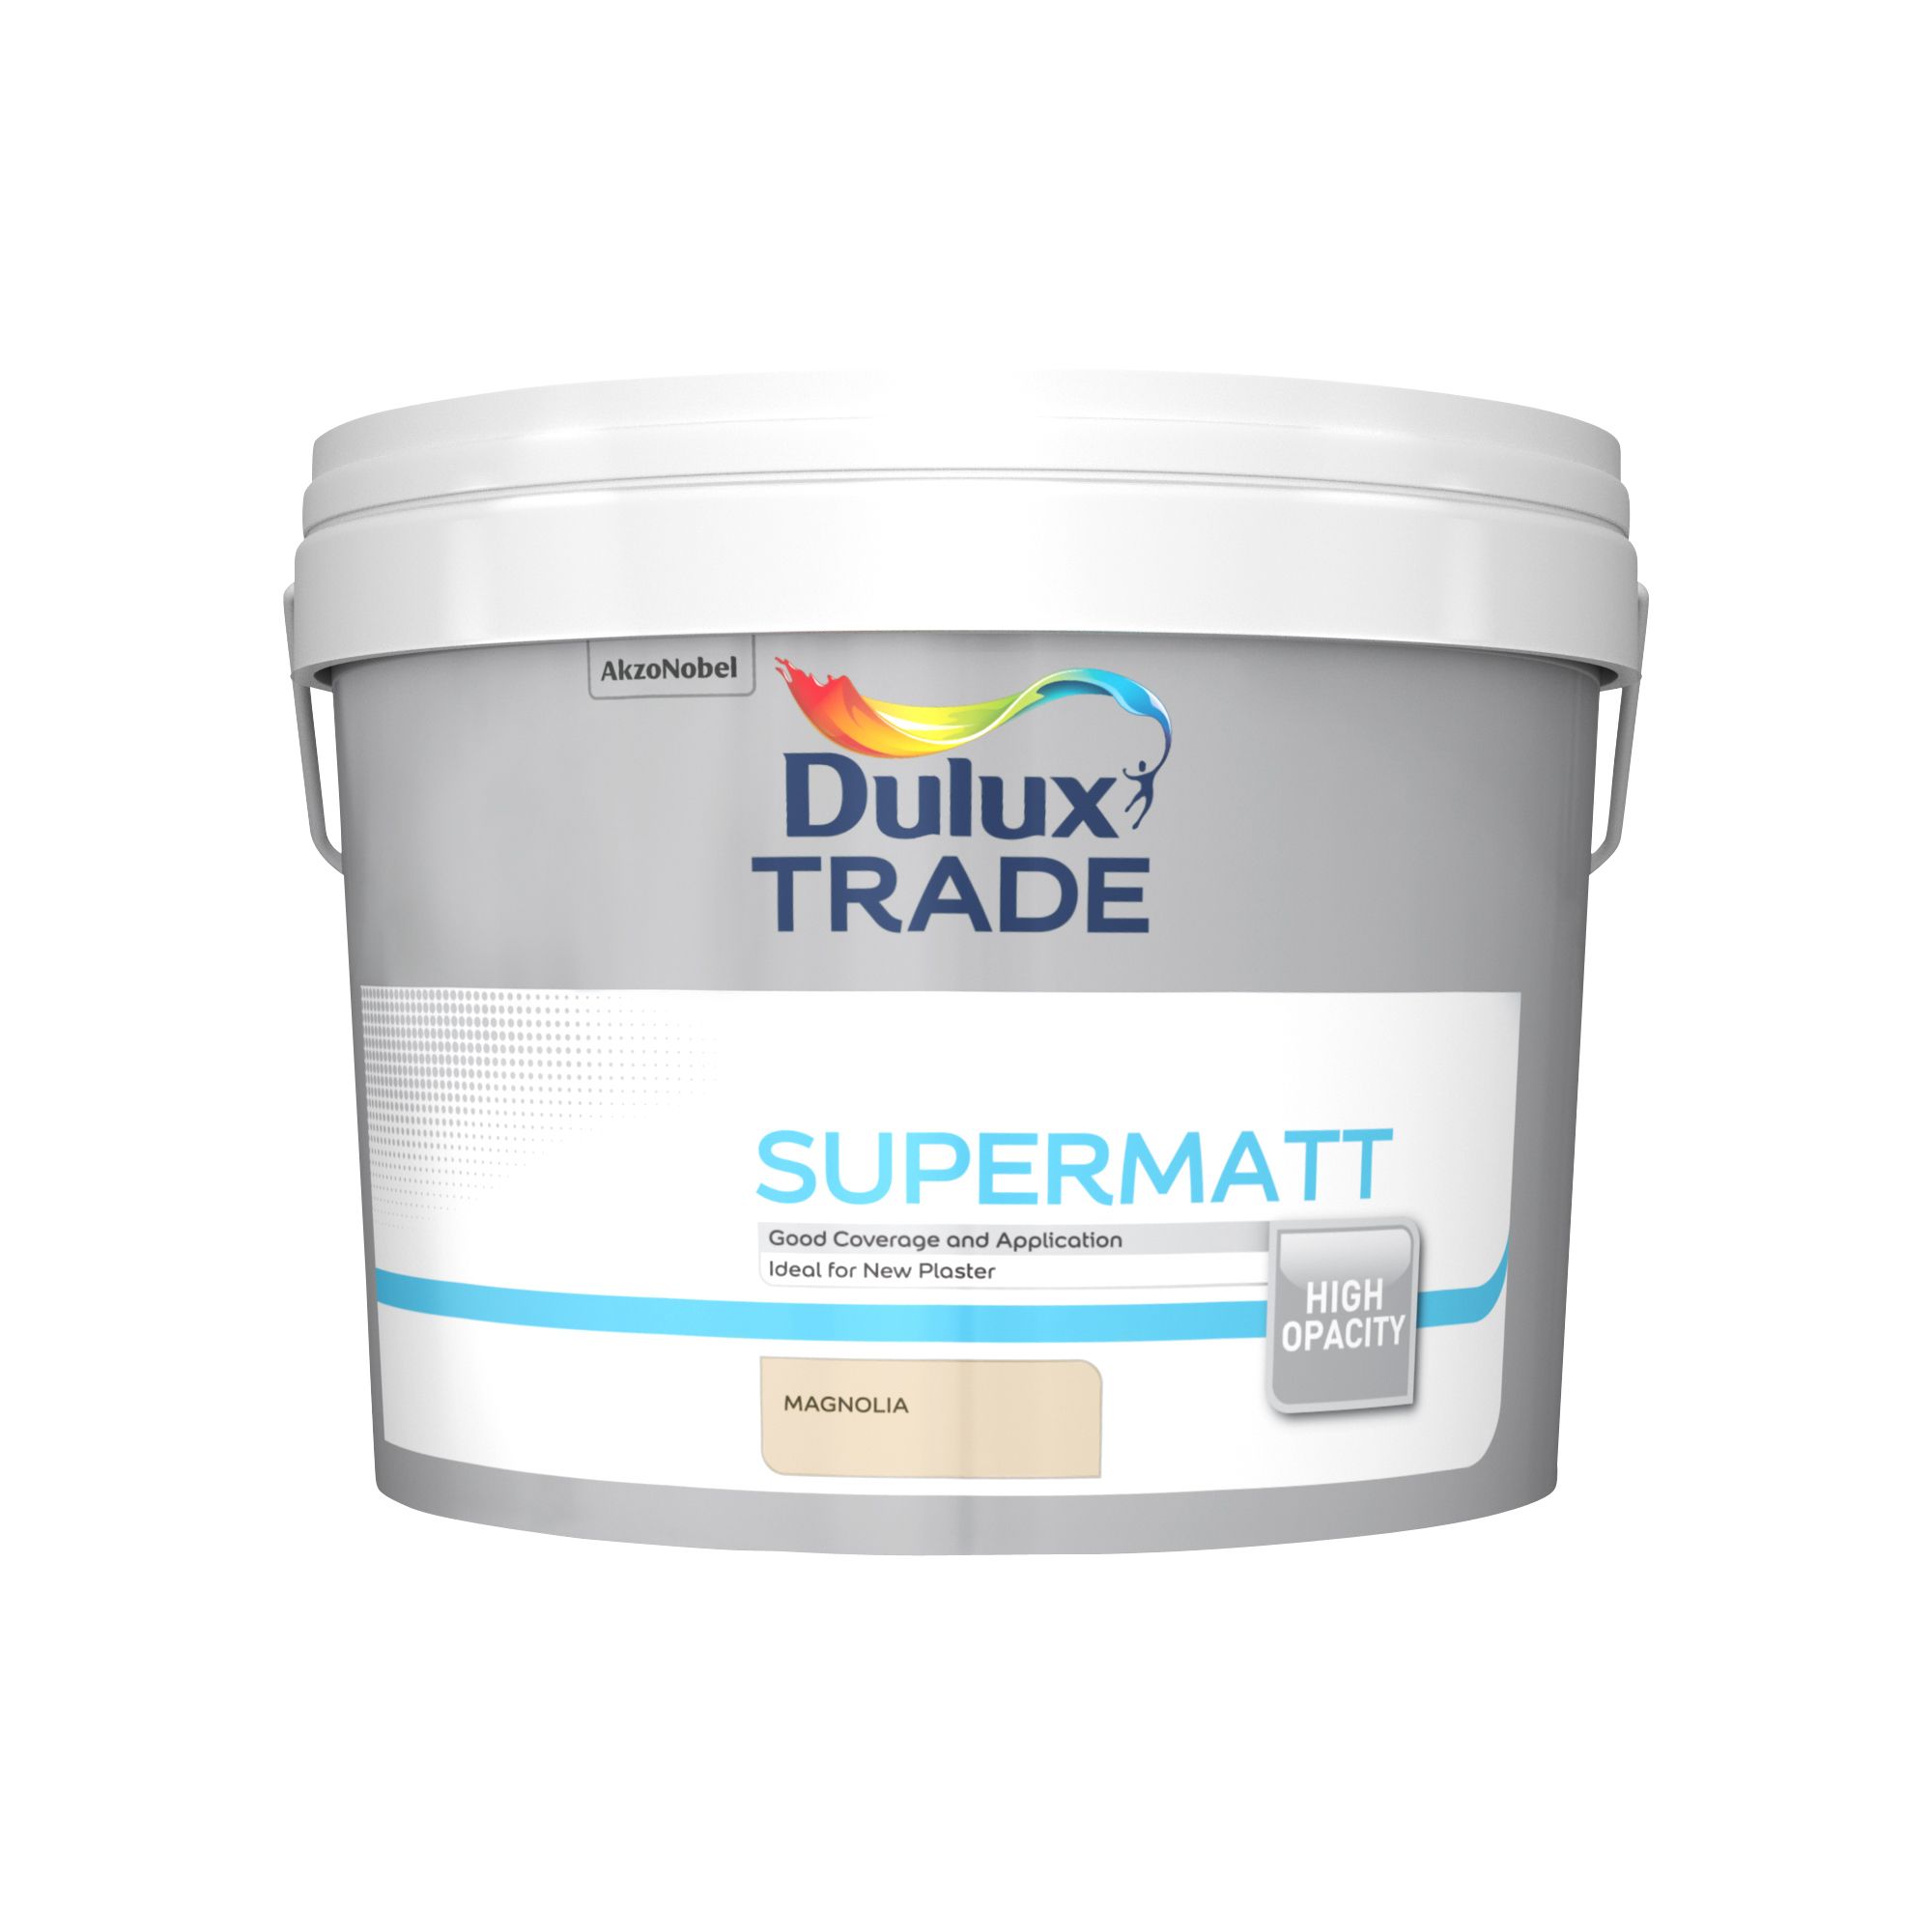 Dulux Trade Magnolia Super matt Emulsion paint, 10L